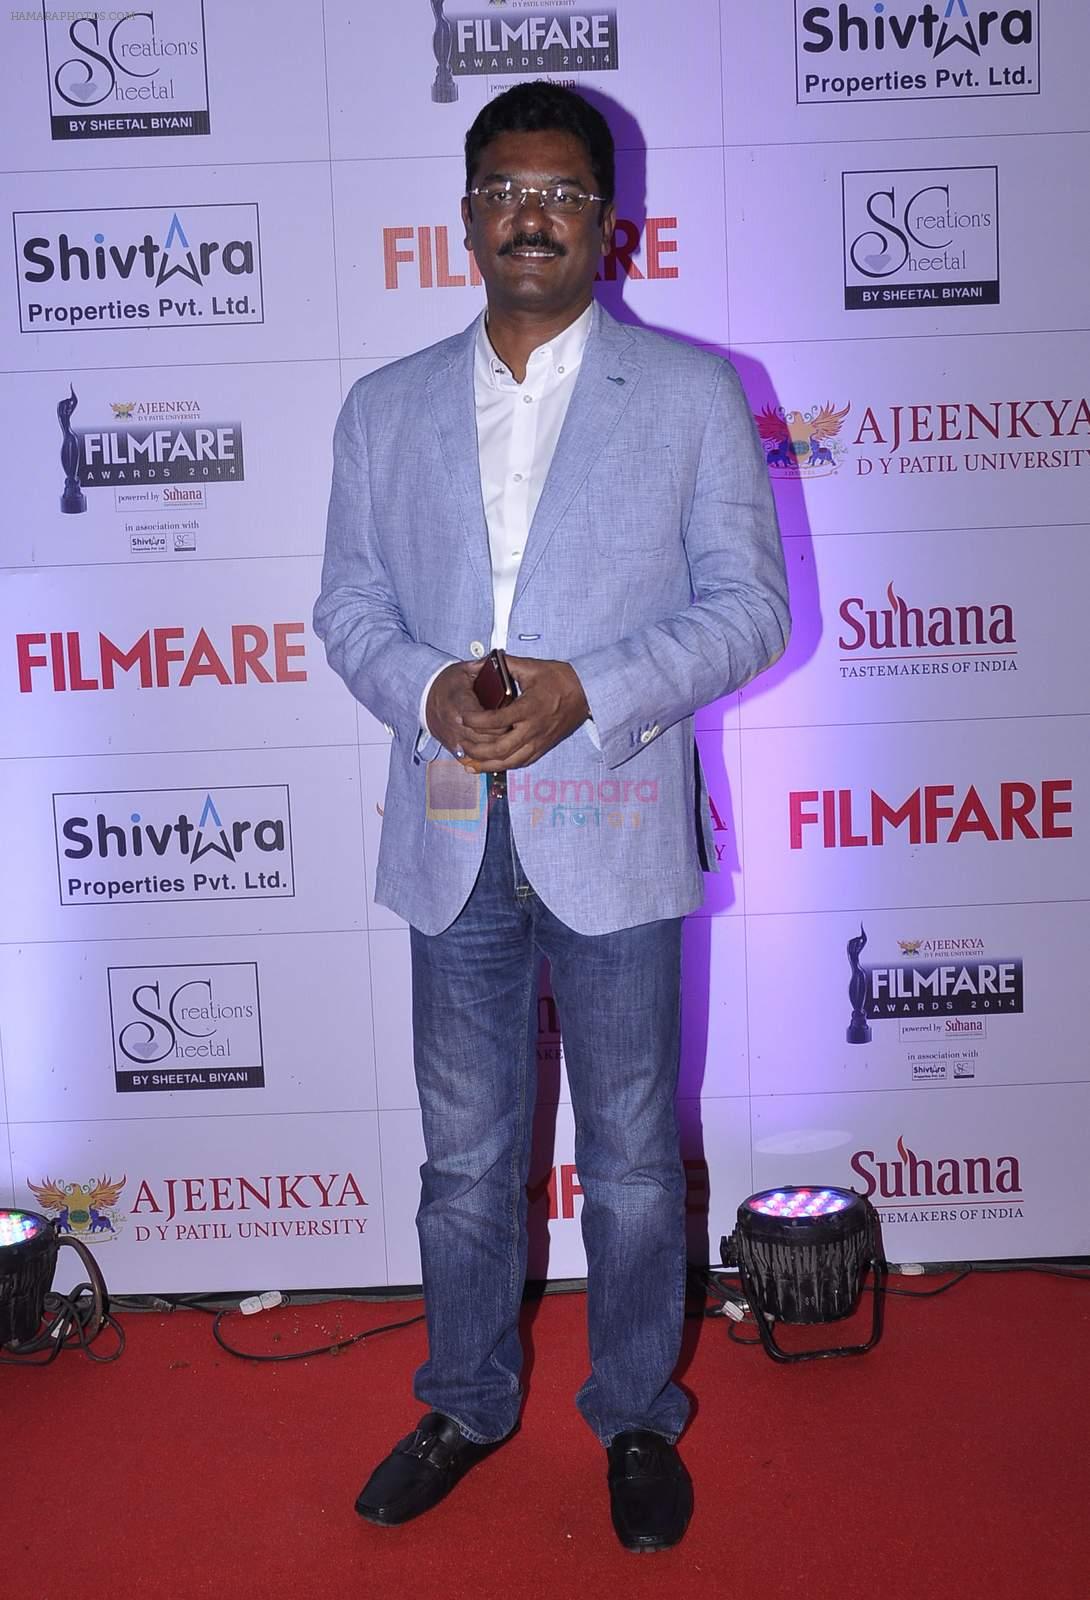 Pratap Sarnaik at the Red Carpet of _Ajeenkya DY Patil University Filmfare Awards